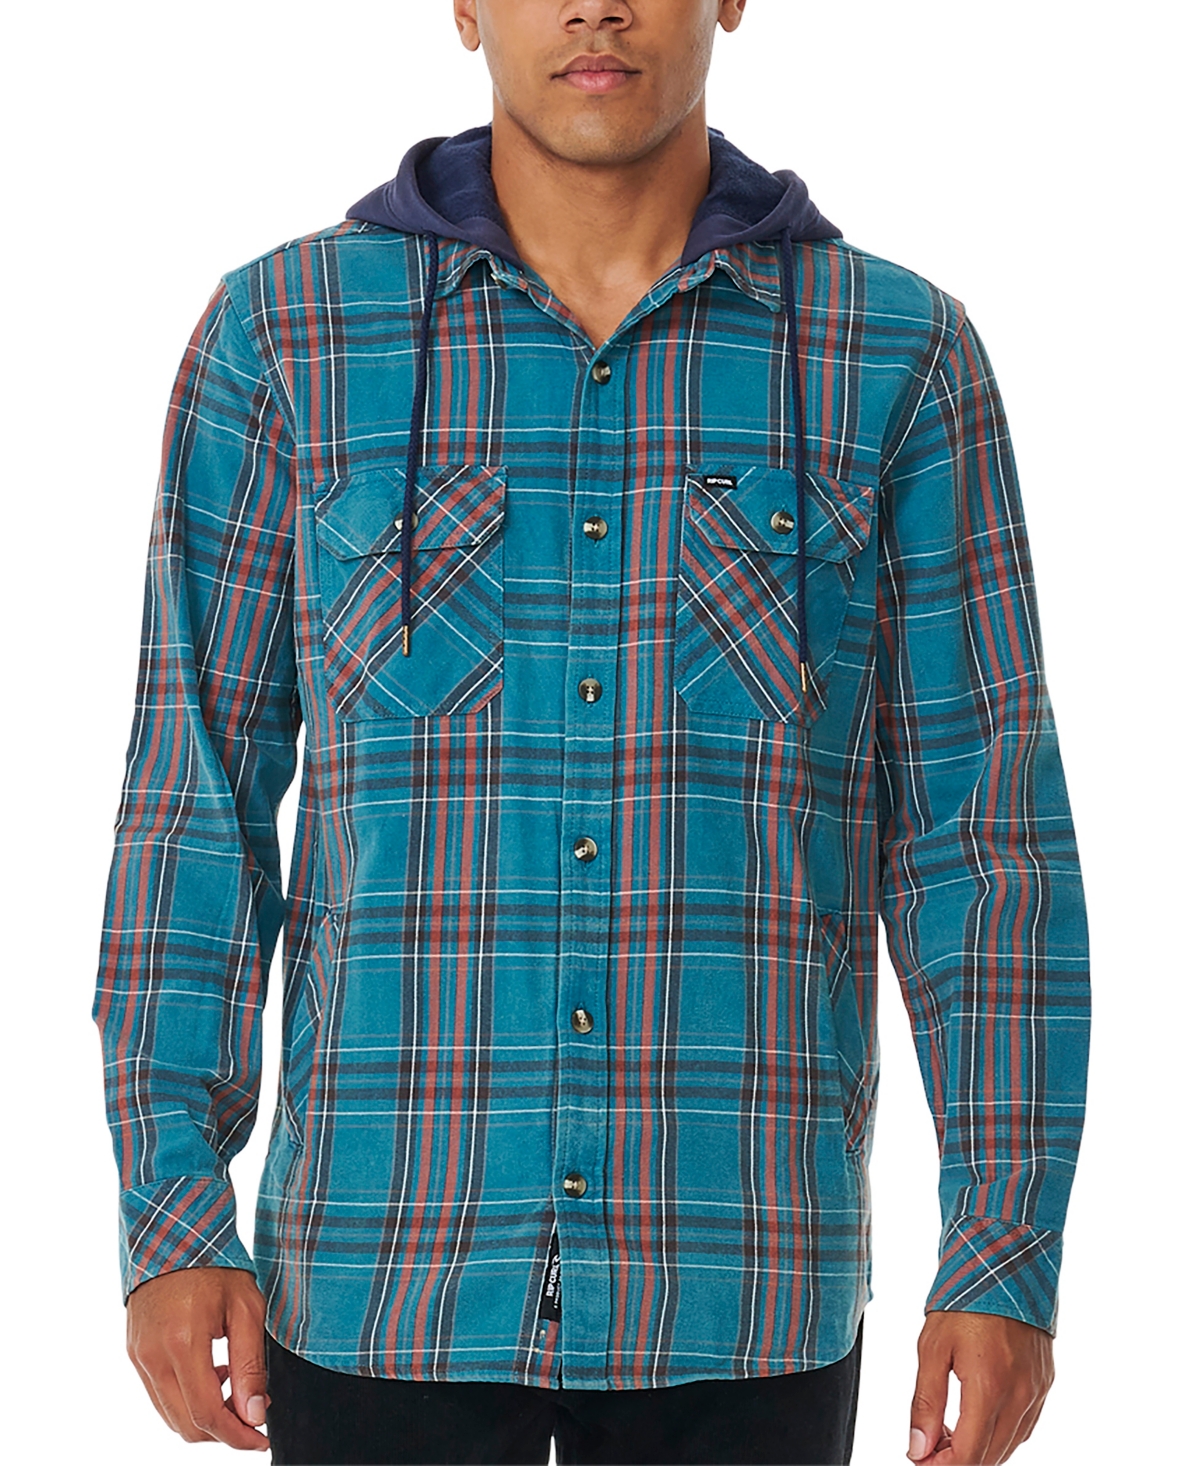 Men's Ranchero Flannel Long Sleeve Shirt - Ocean